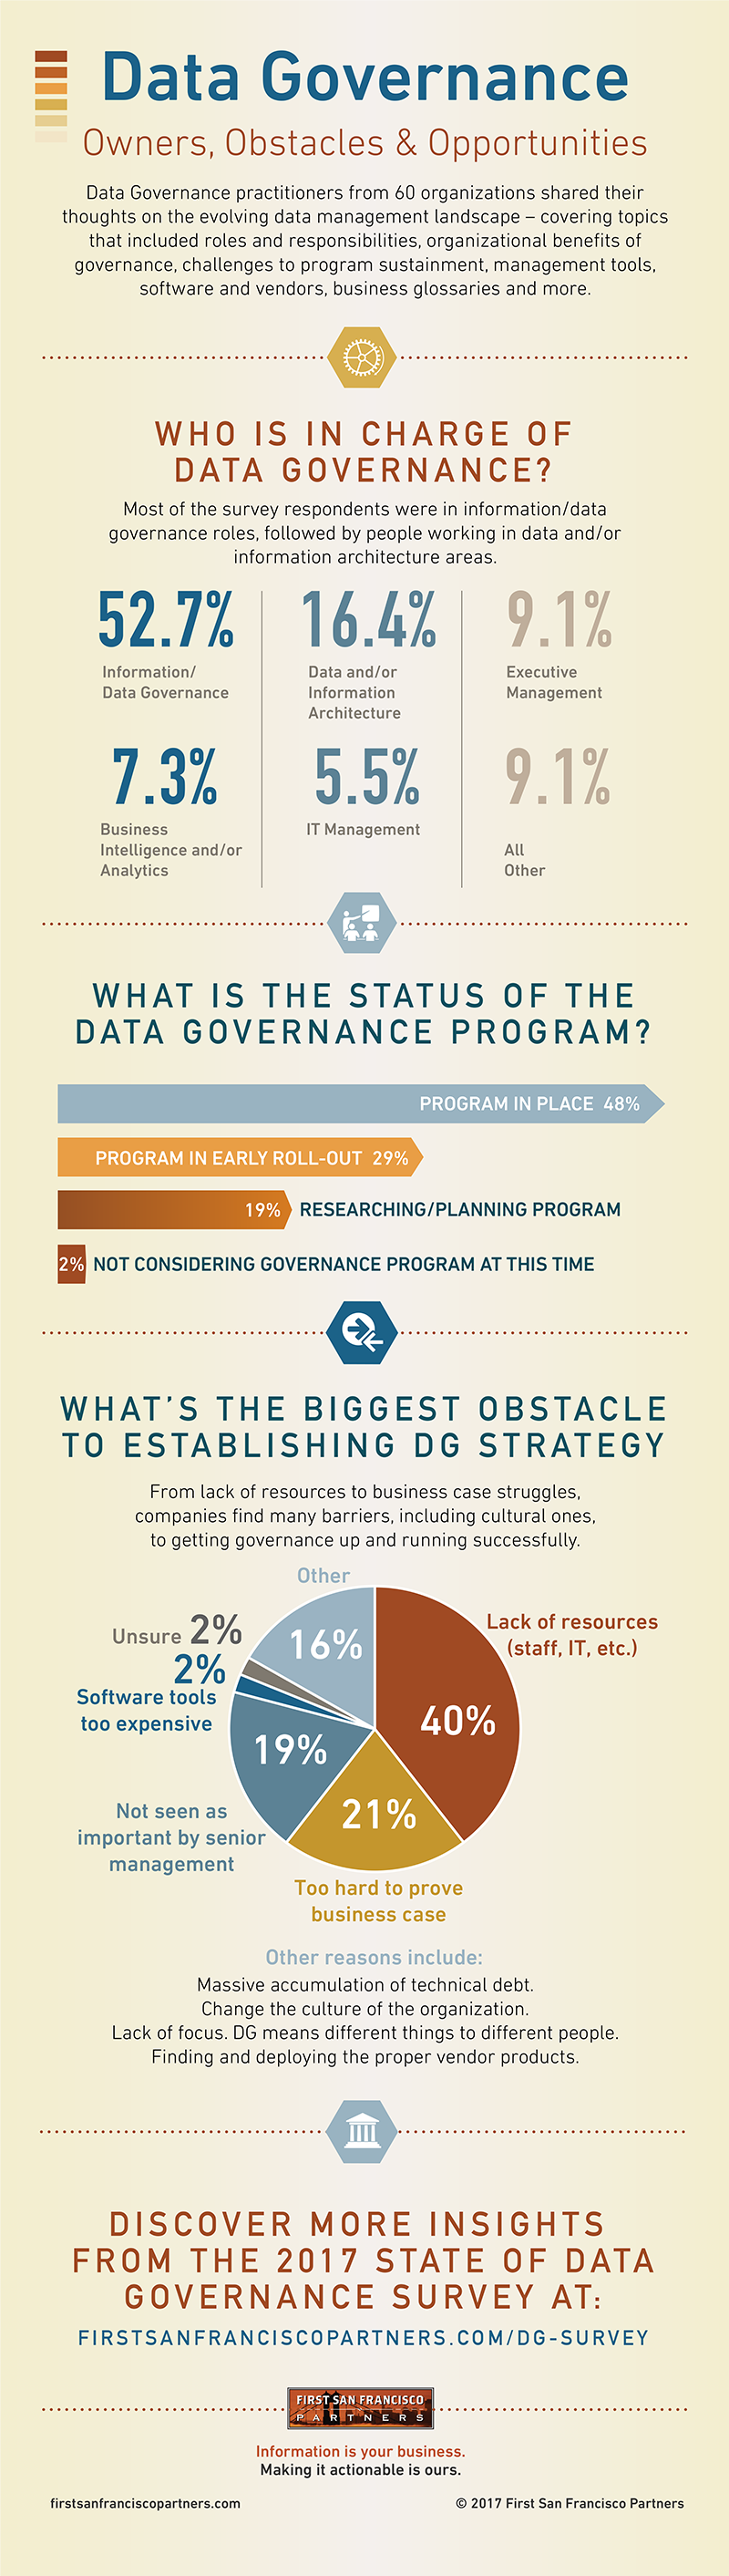 Data Governance survey infographic